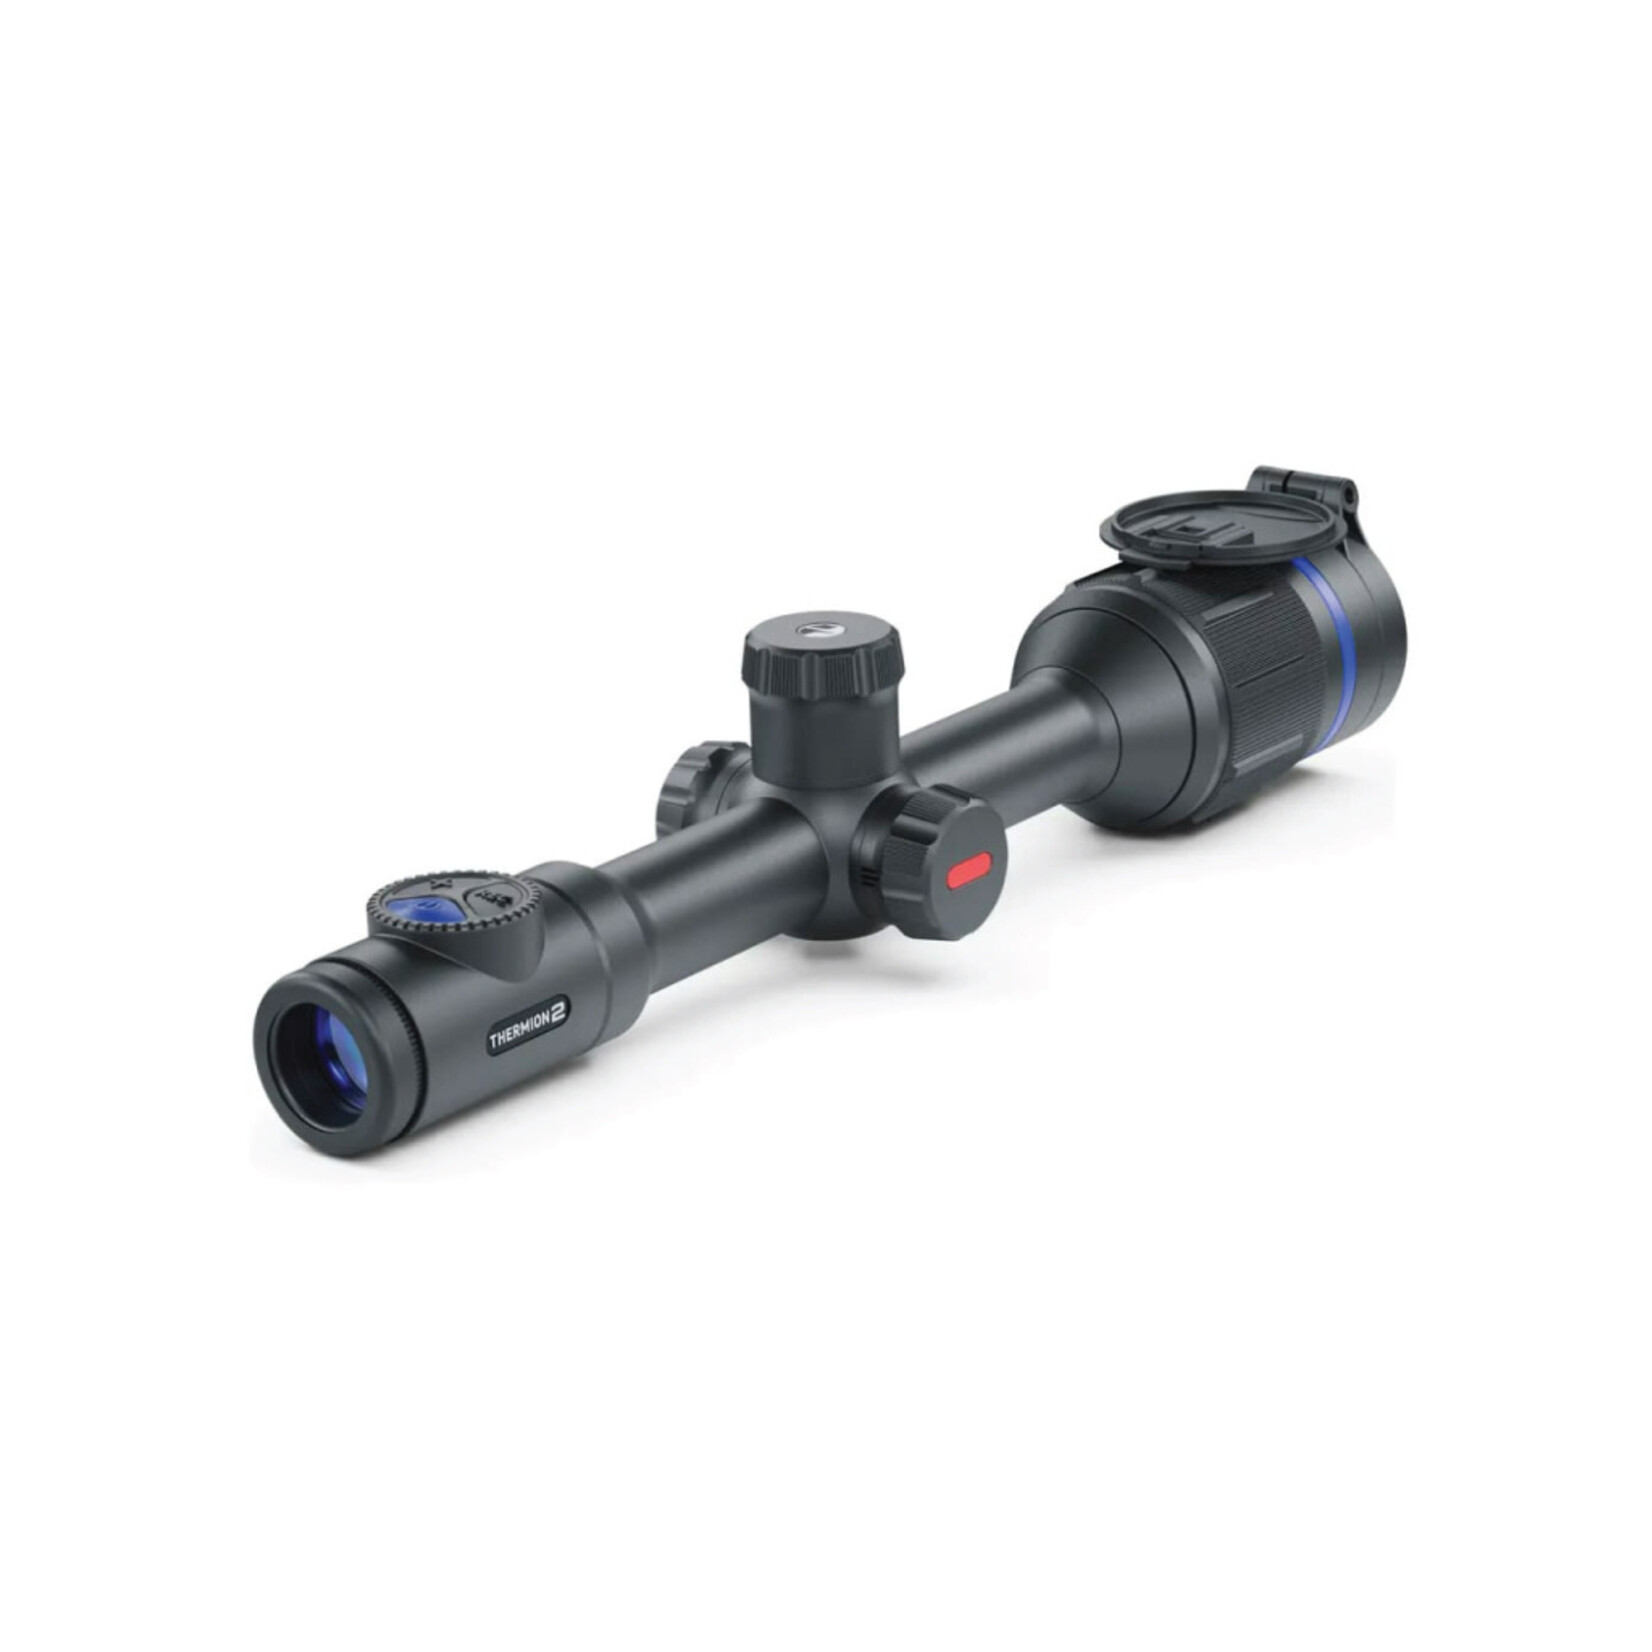 Pulsar Thermion 2 XQ50 3.5-14x50 Thermal Riflescope